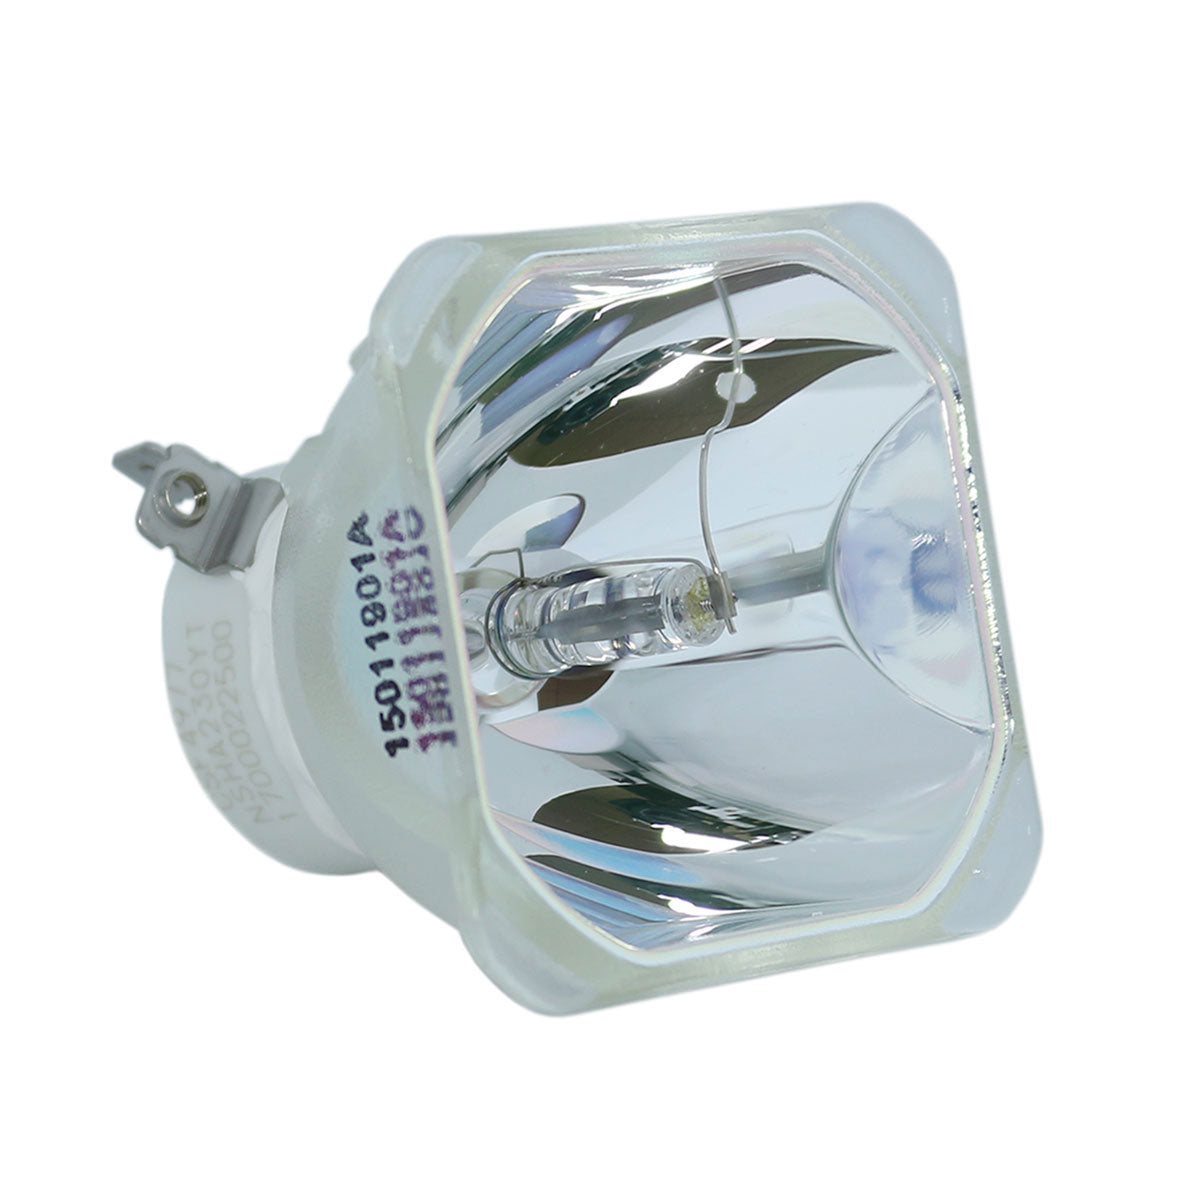 Kindermann 8472 Ushio Projector Bare Lamp